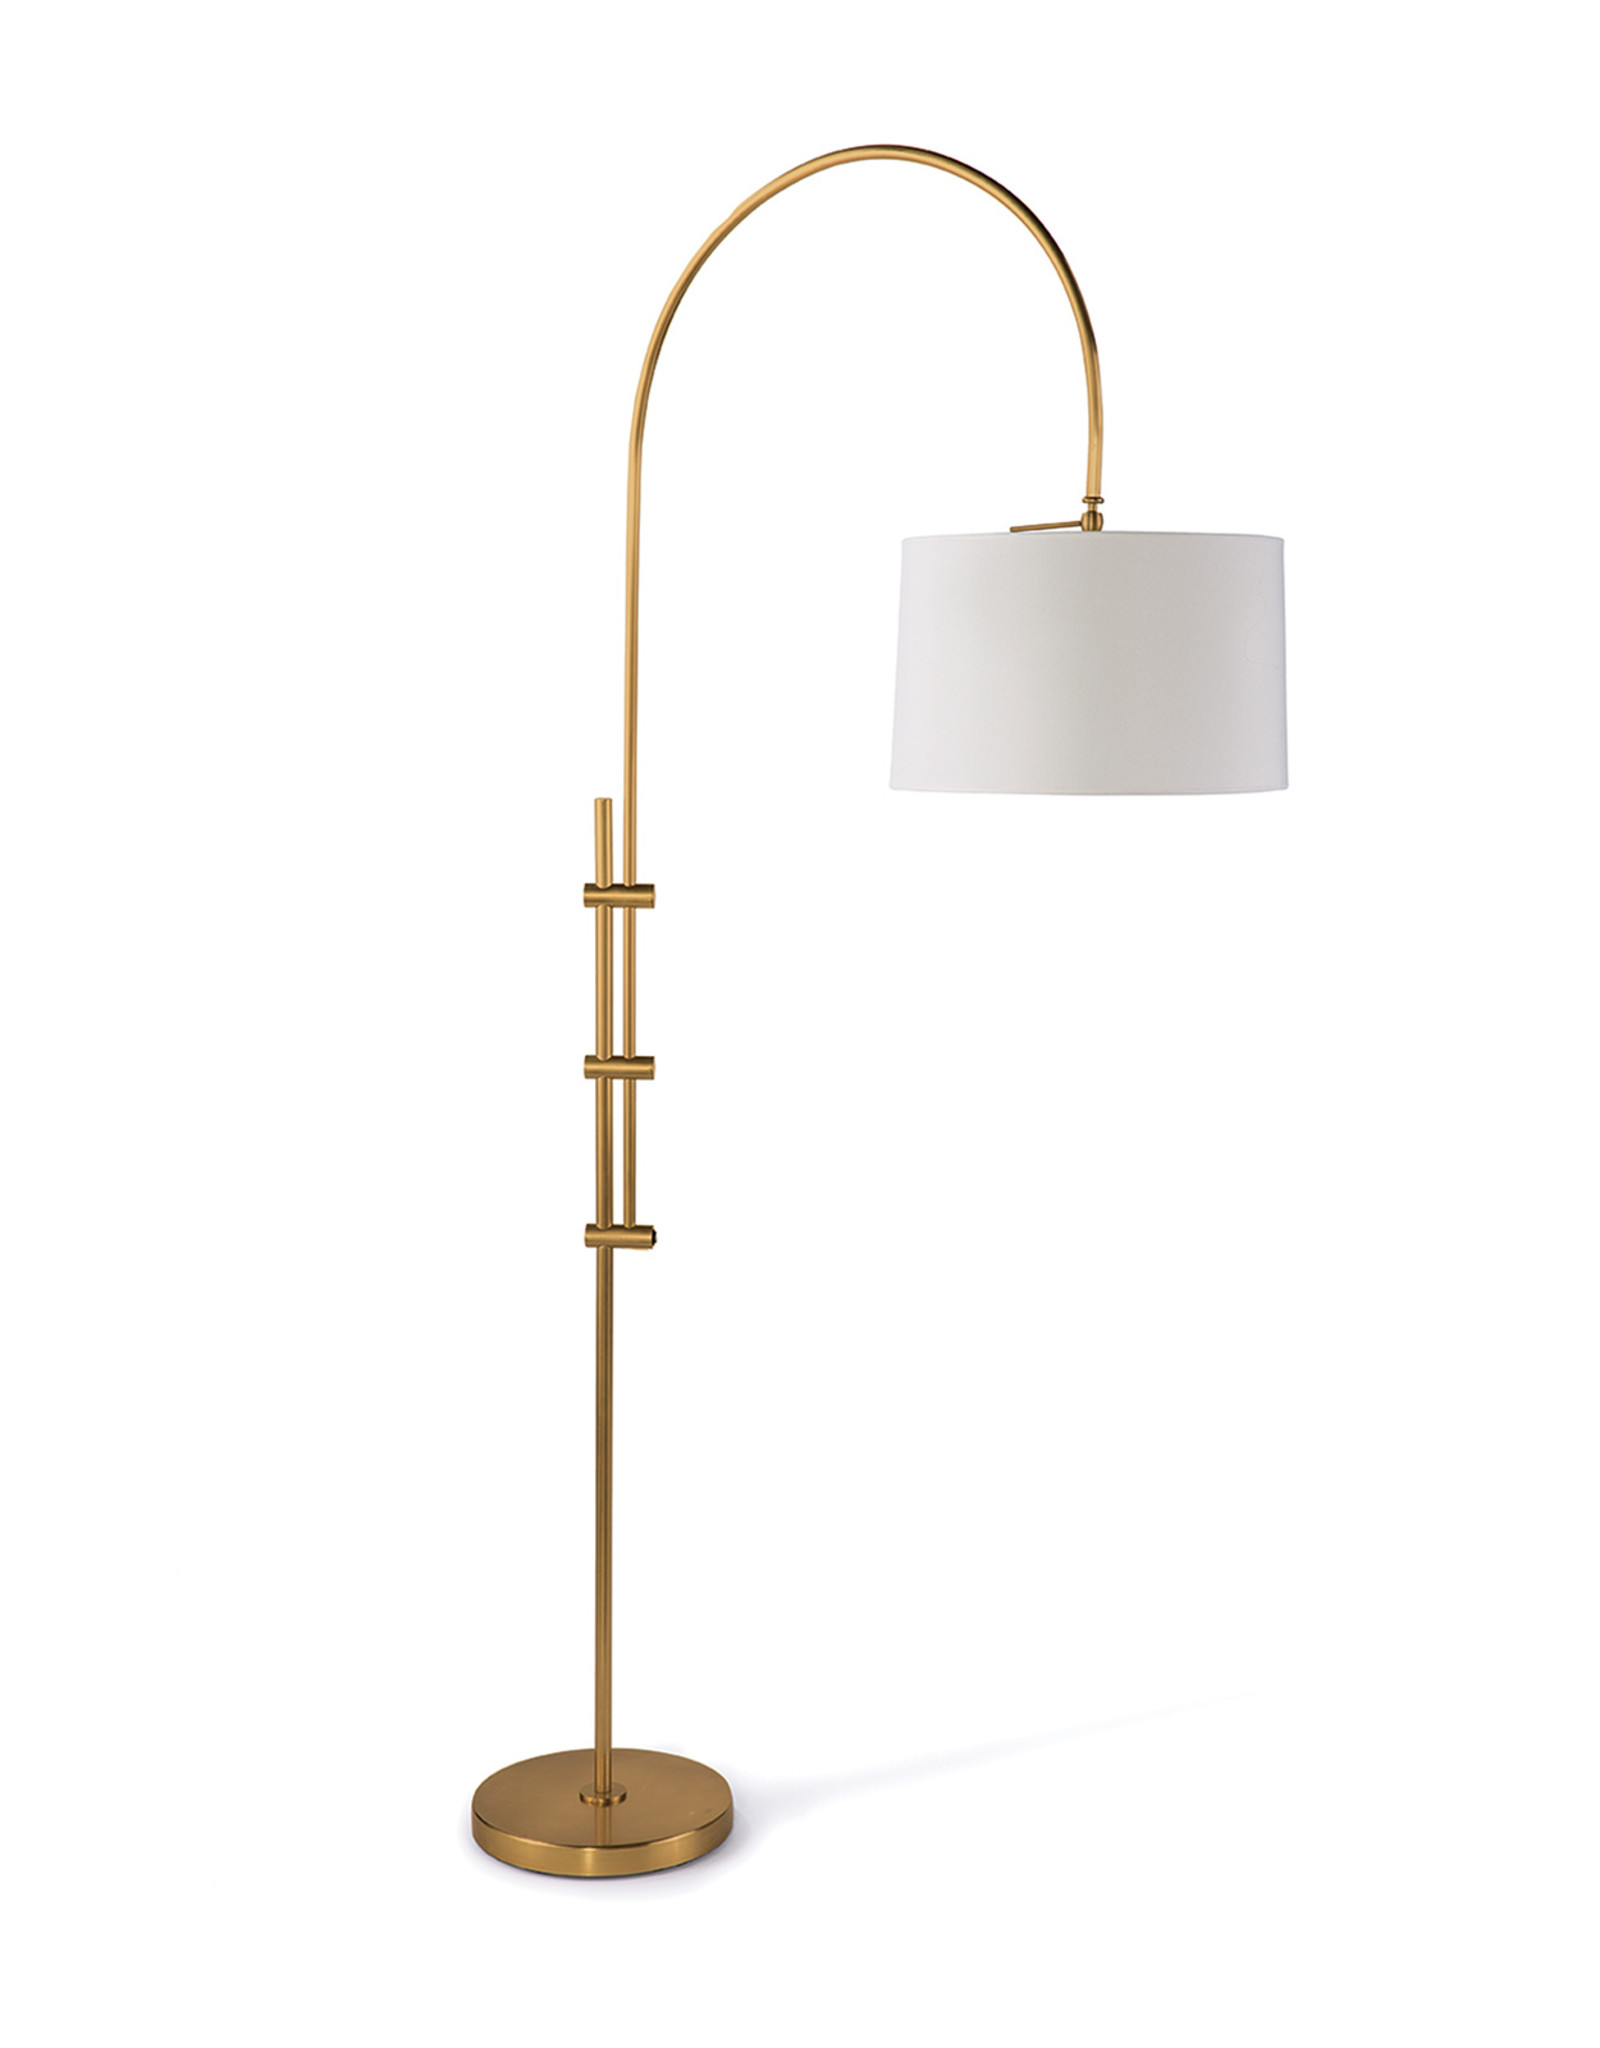 Regina Andrew Design Arc Floor Lamp With Fabric Shade (Natural Brass)